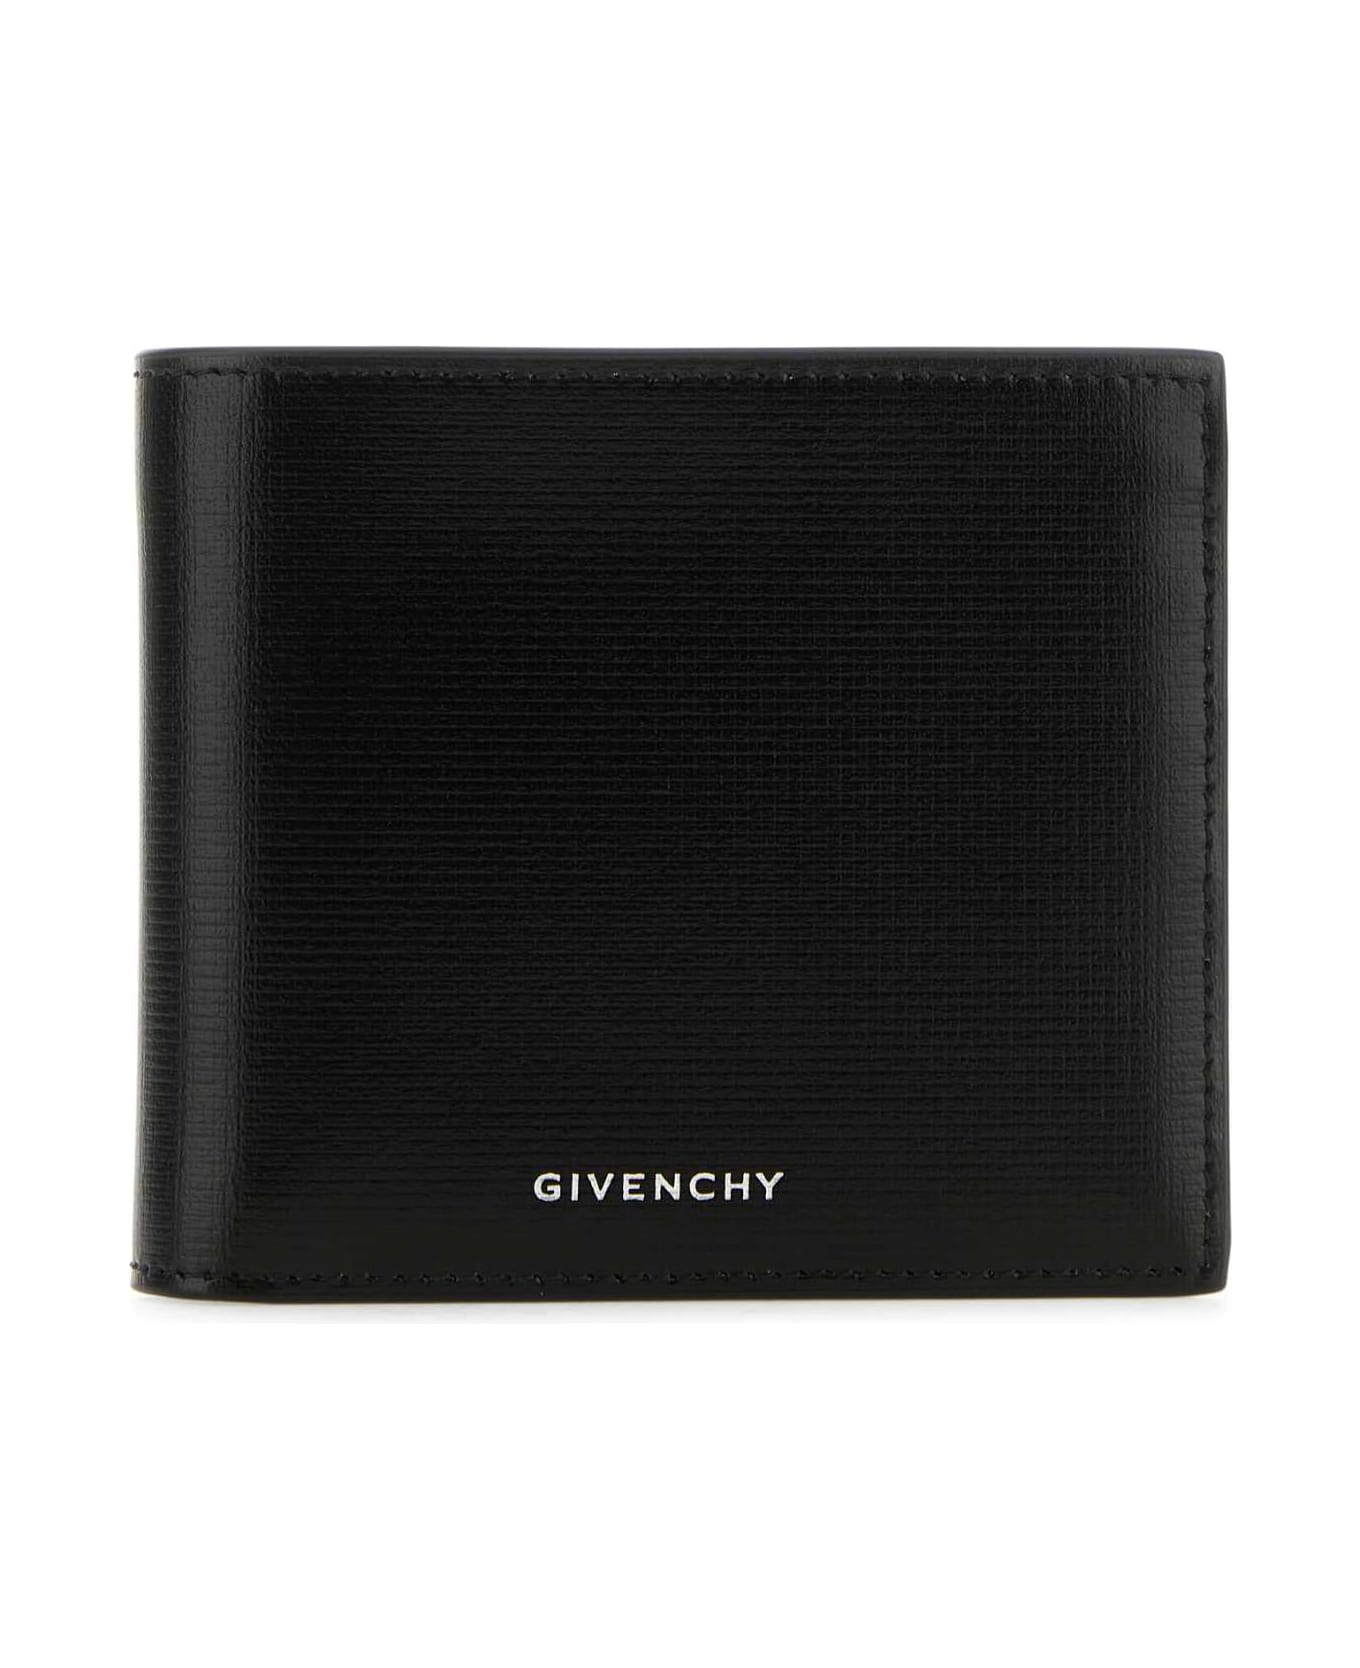 Givenchy Black Leather Wallet - Black